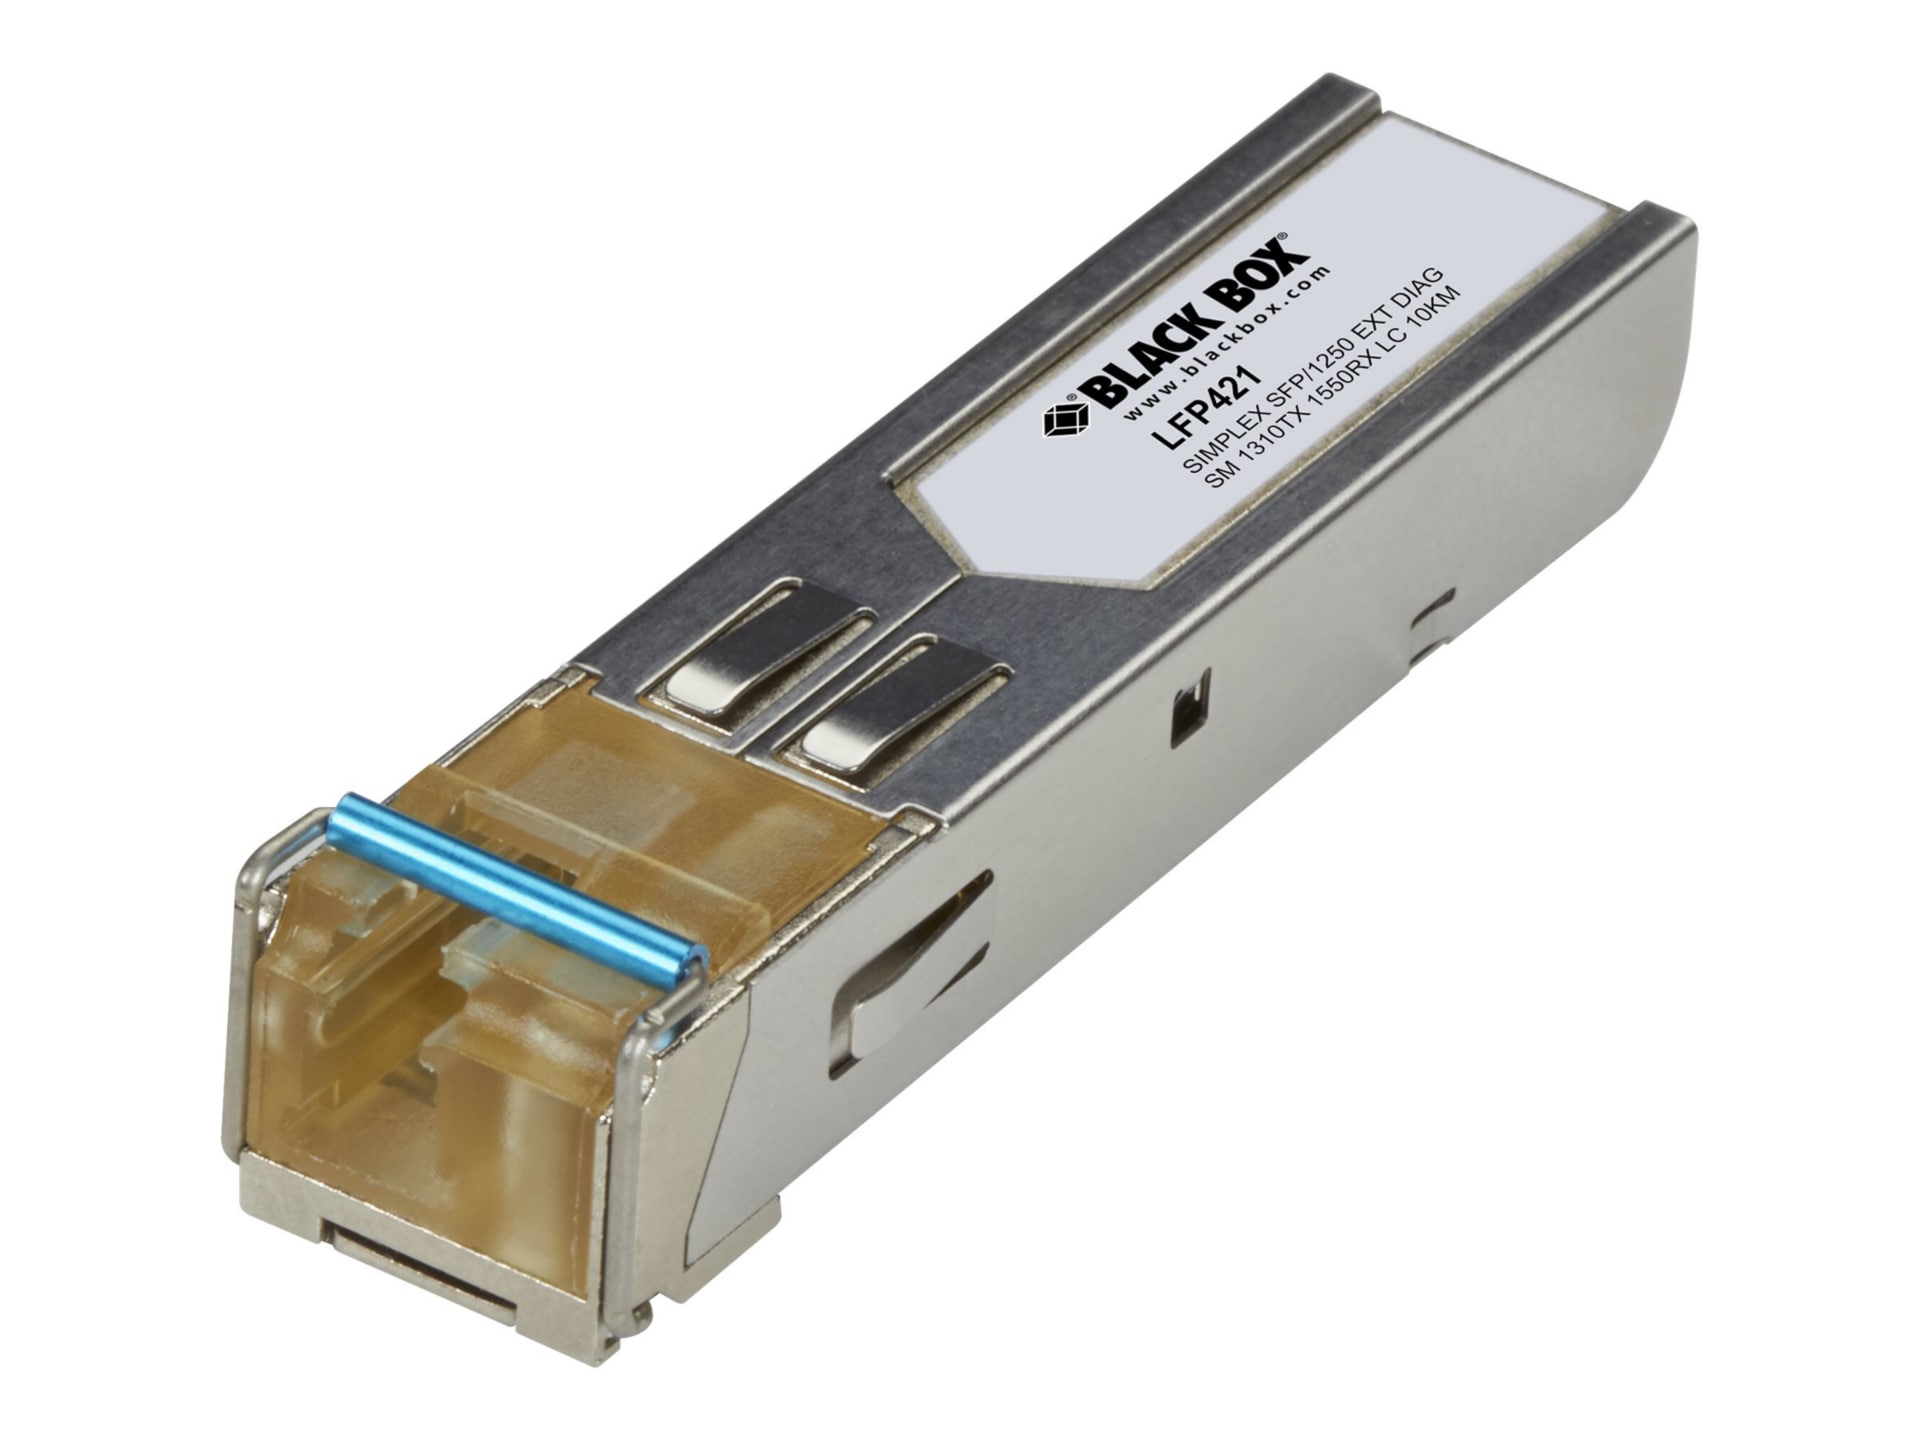 Black Box with Extended Diagnostics - SFP (mini-GBIC) transceiver module -